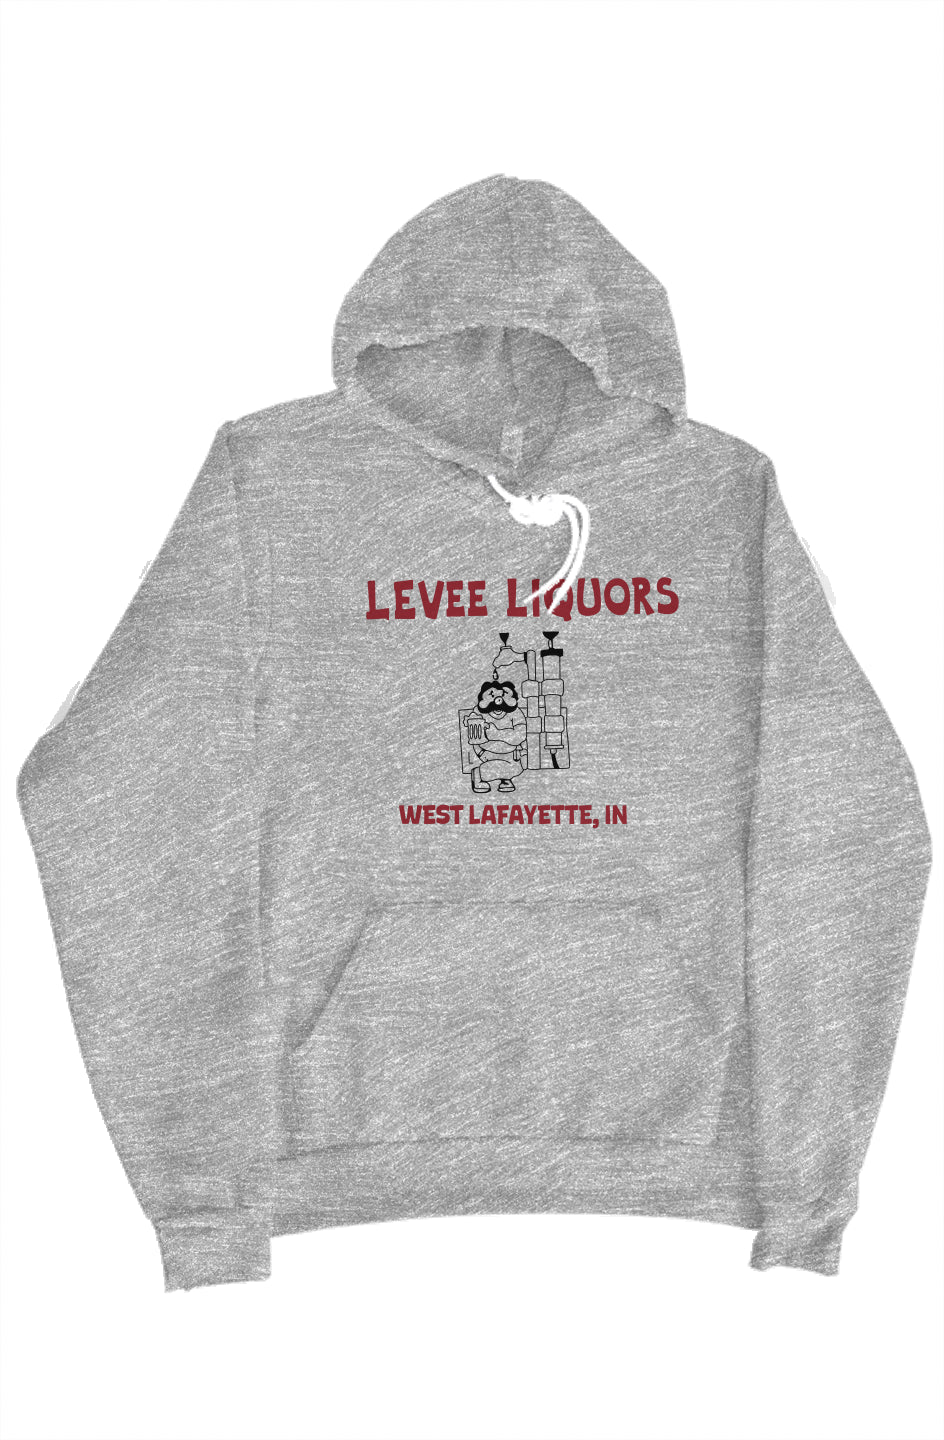 Levee Liquors Pullover Hoodie